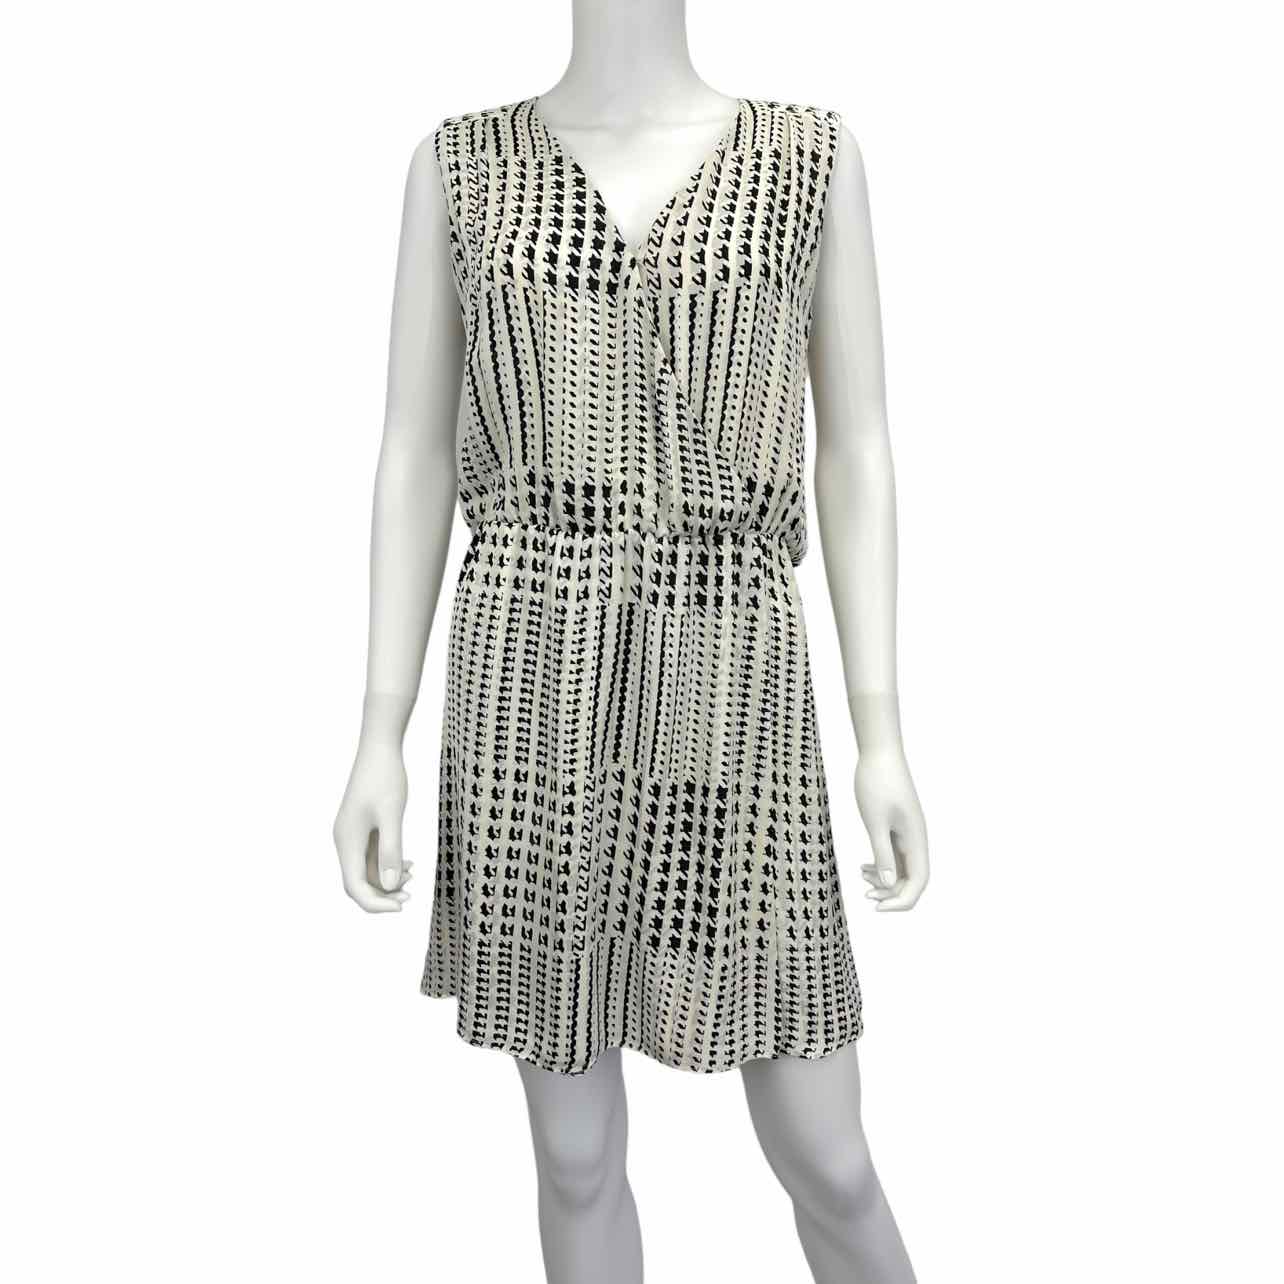 Parker Black & White Print Dress Size L